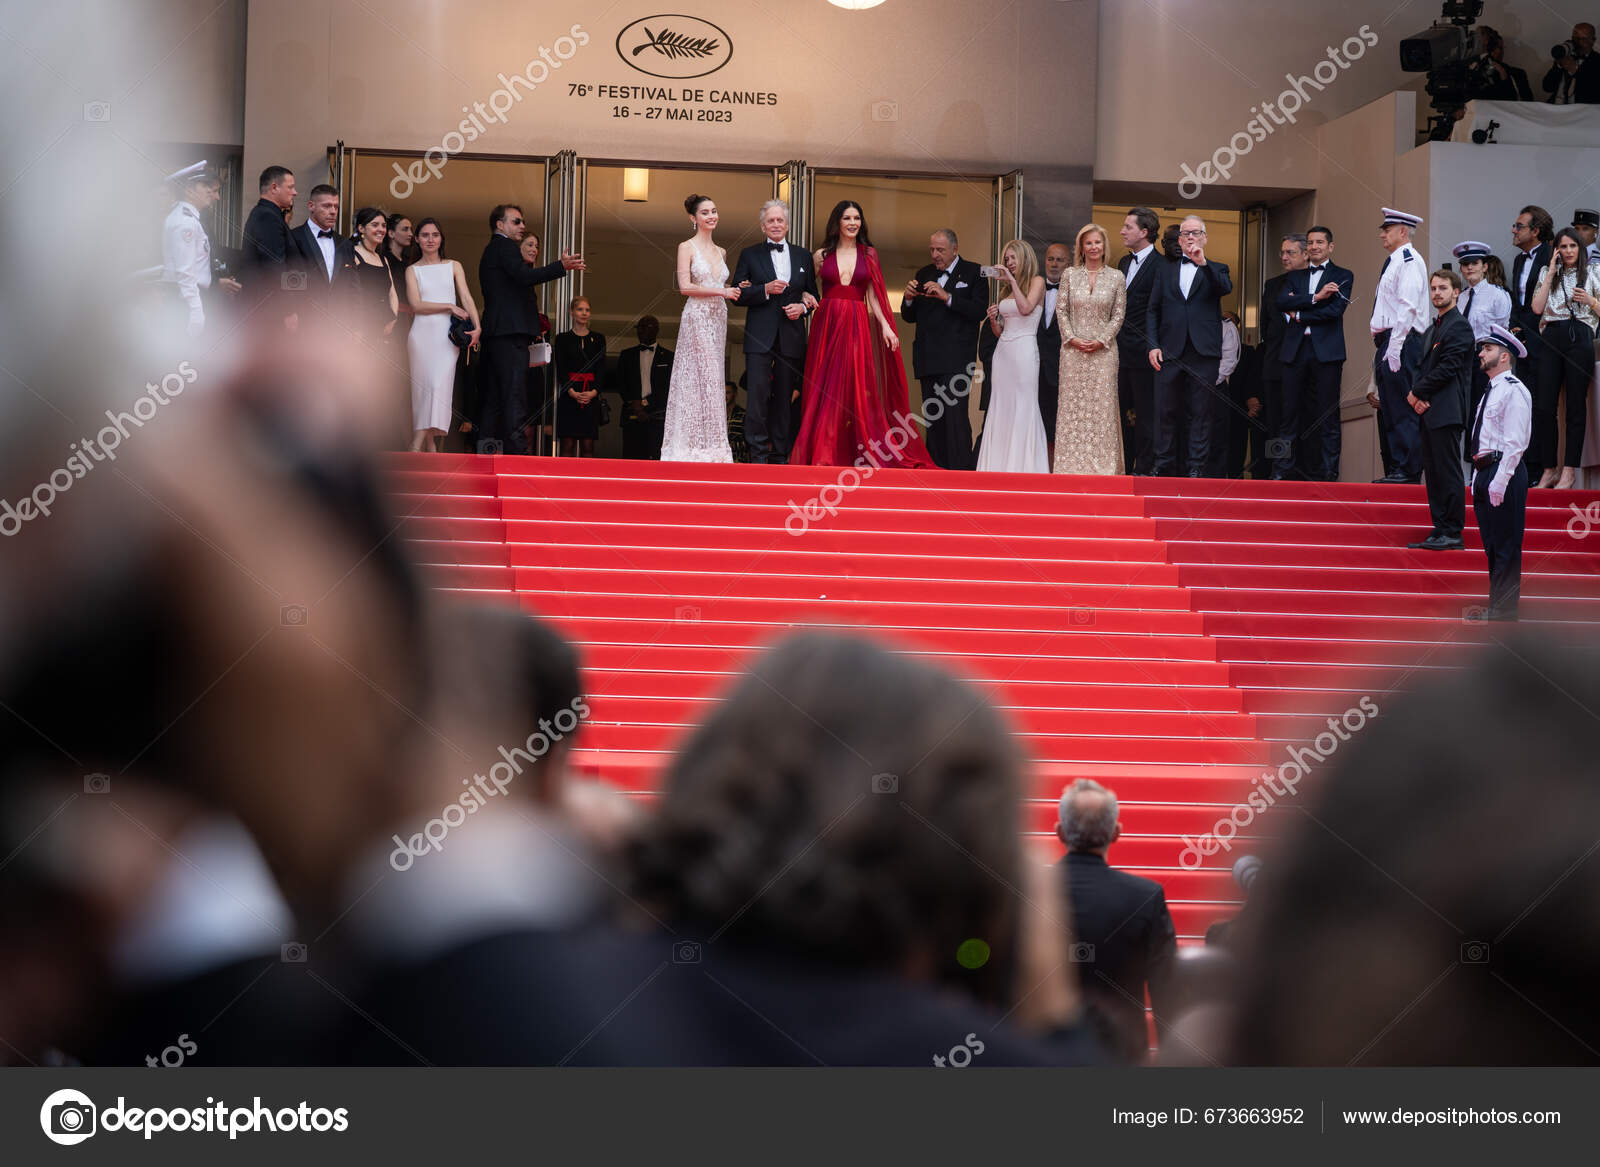 Cannes 2023: Michael Douglas and Catherine Zeta-Jones on the red